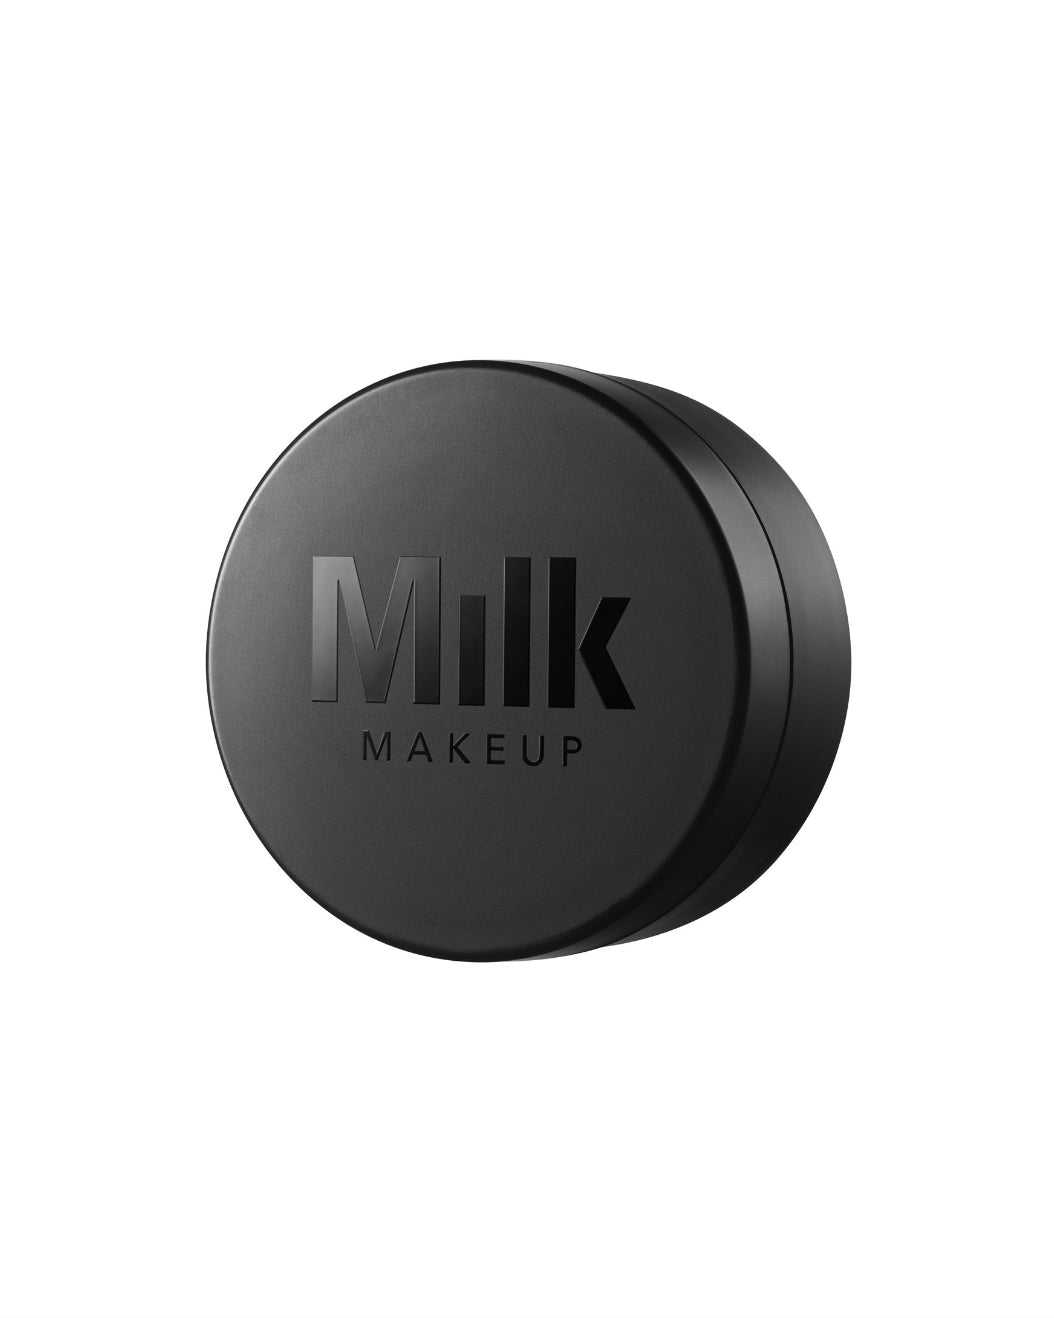 Jar of Milk Makeup Pore Eclipse Matte Translucent Setting Powder on a white background